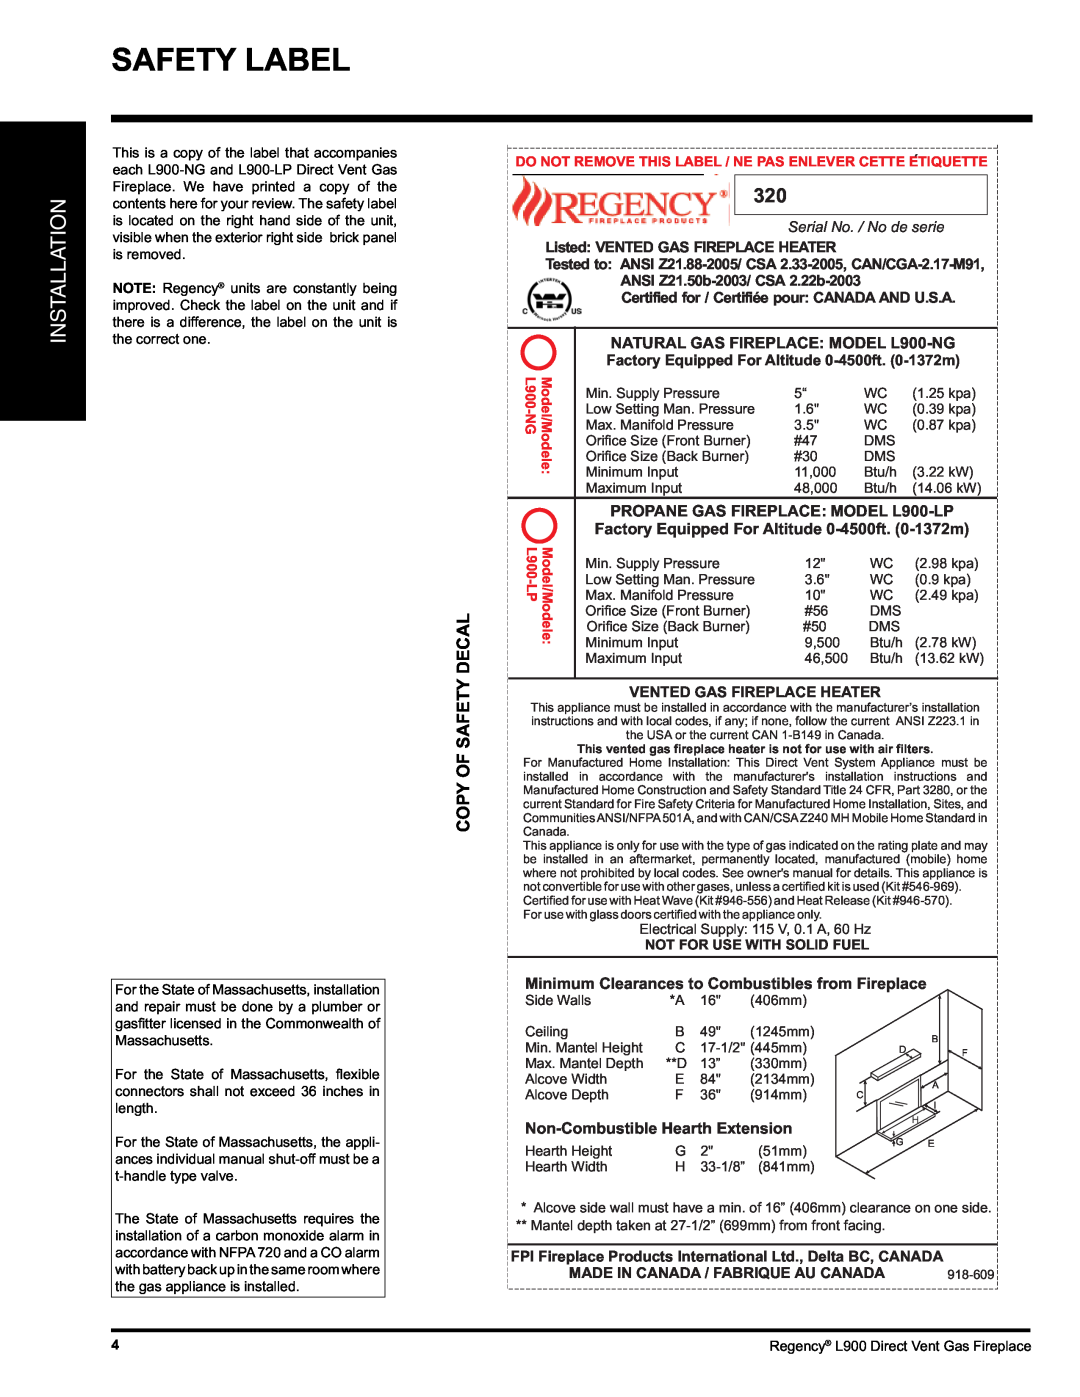 Regency Safety Label, Installation, NATURAL GAS FIREPLACE: MODEL L900-NG, PROPANE GAS FIREPLACE: MODEL L900-LP 